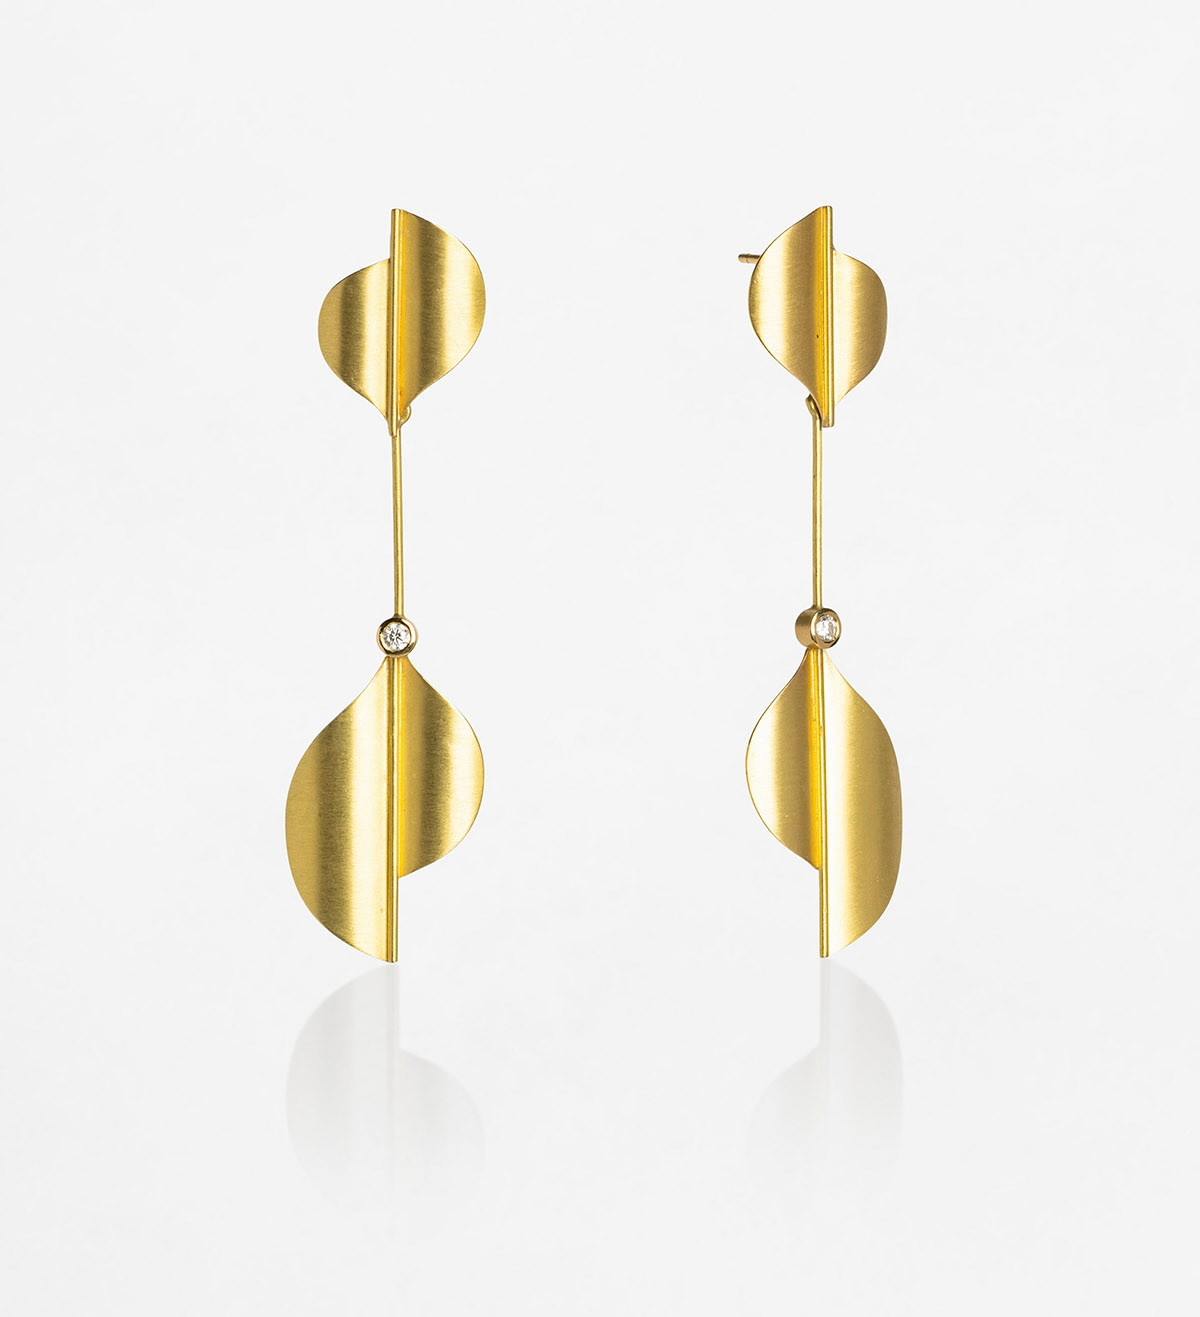 18k gold earrings Seda 62mm with diamonds 0,10ct